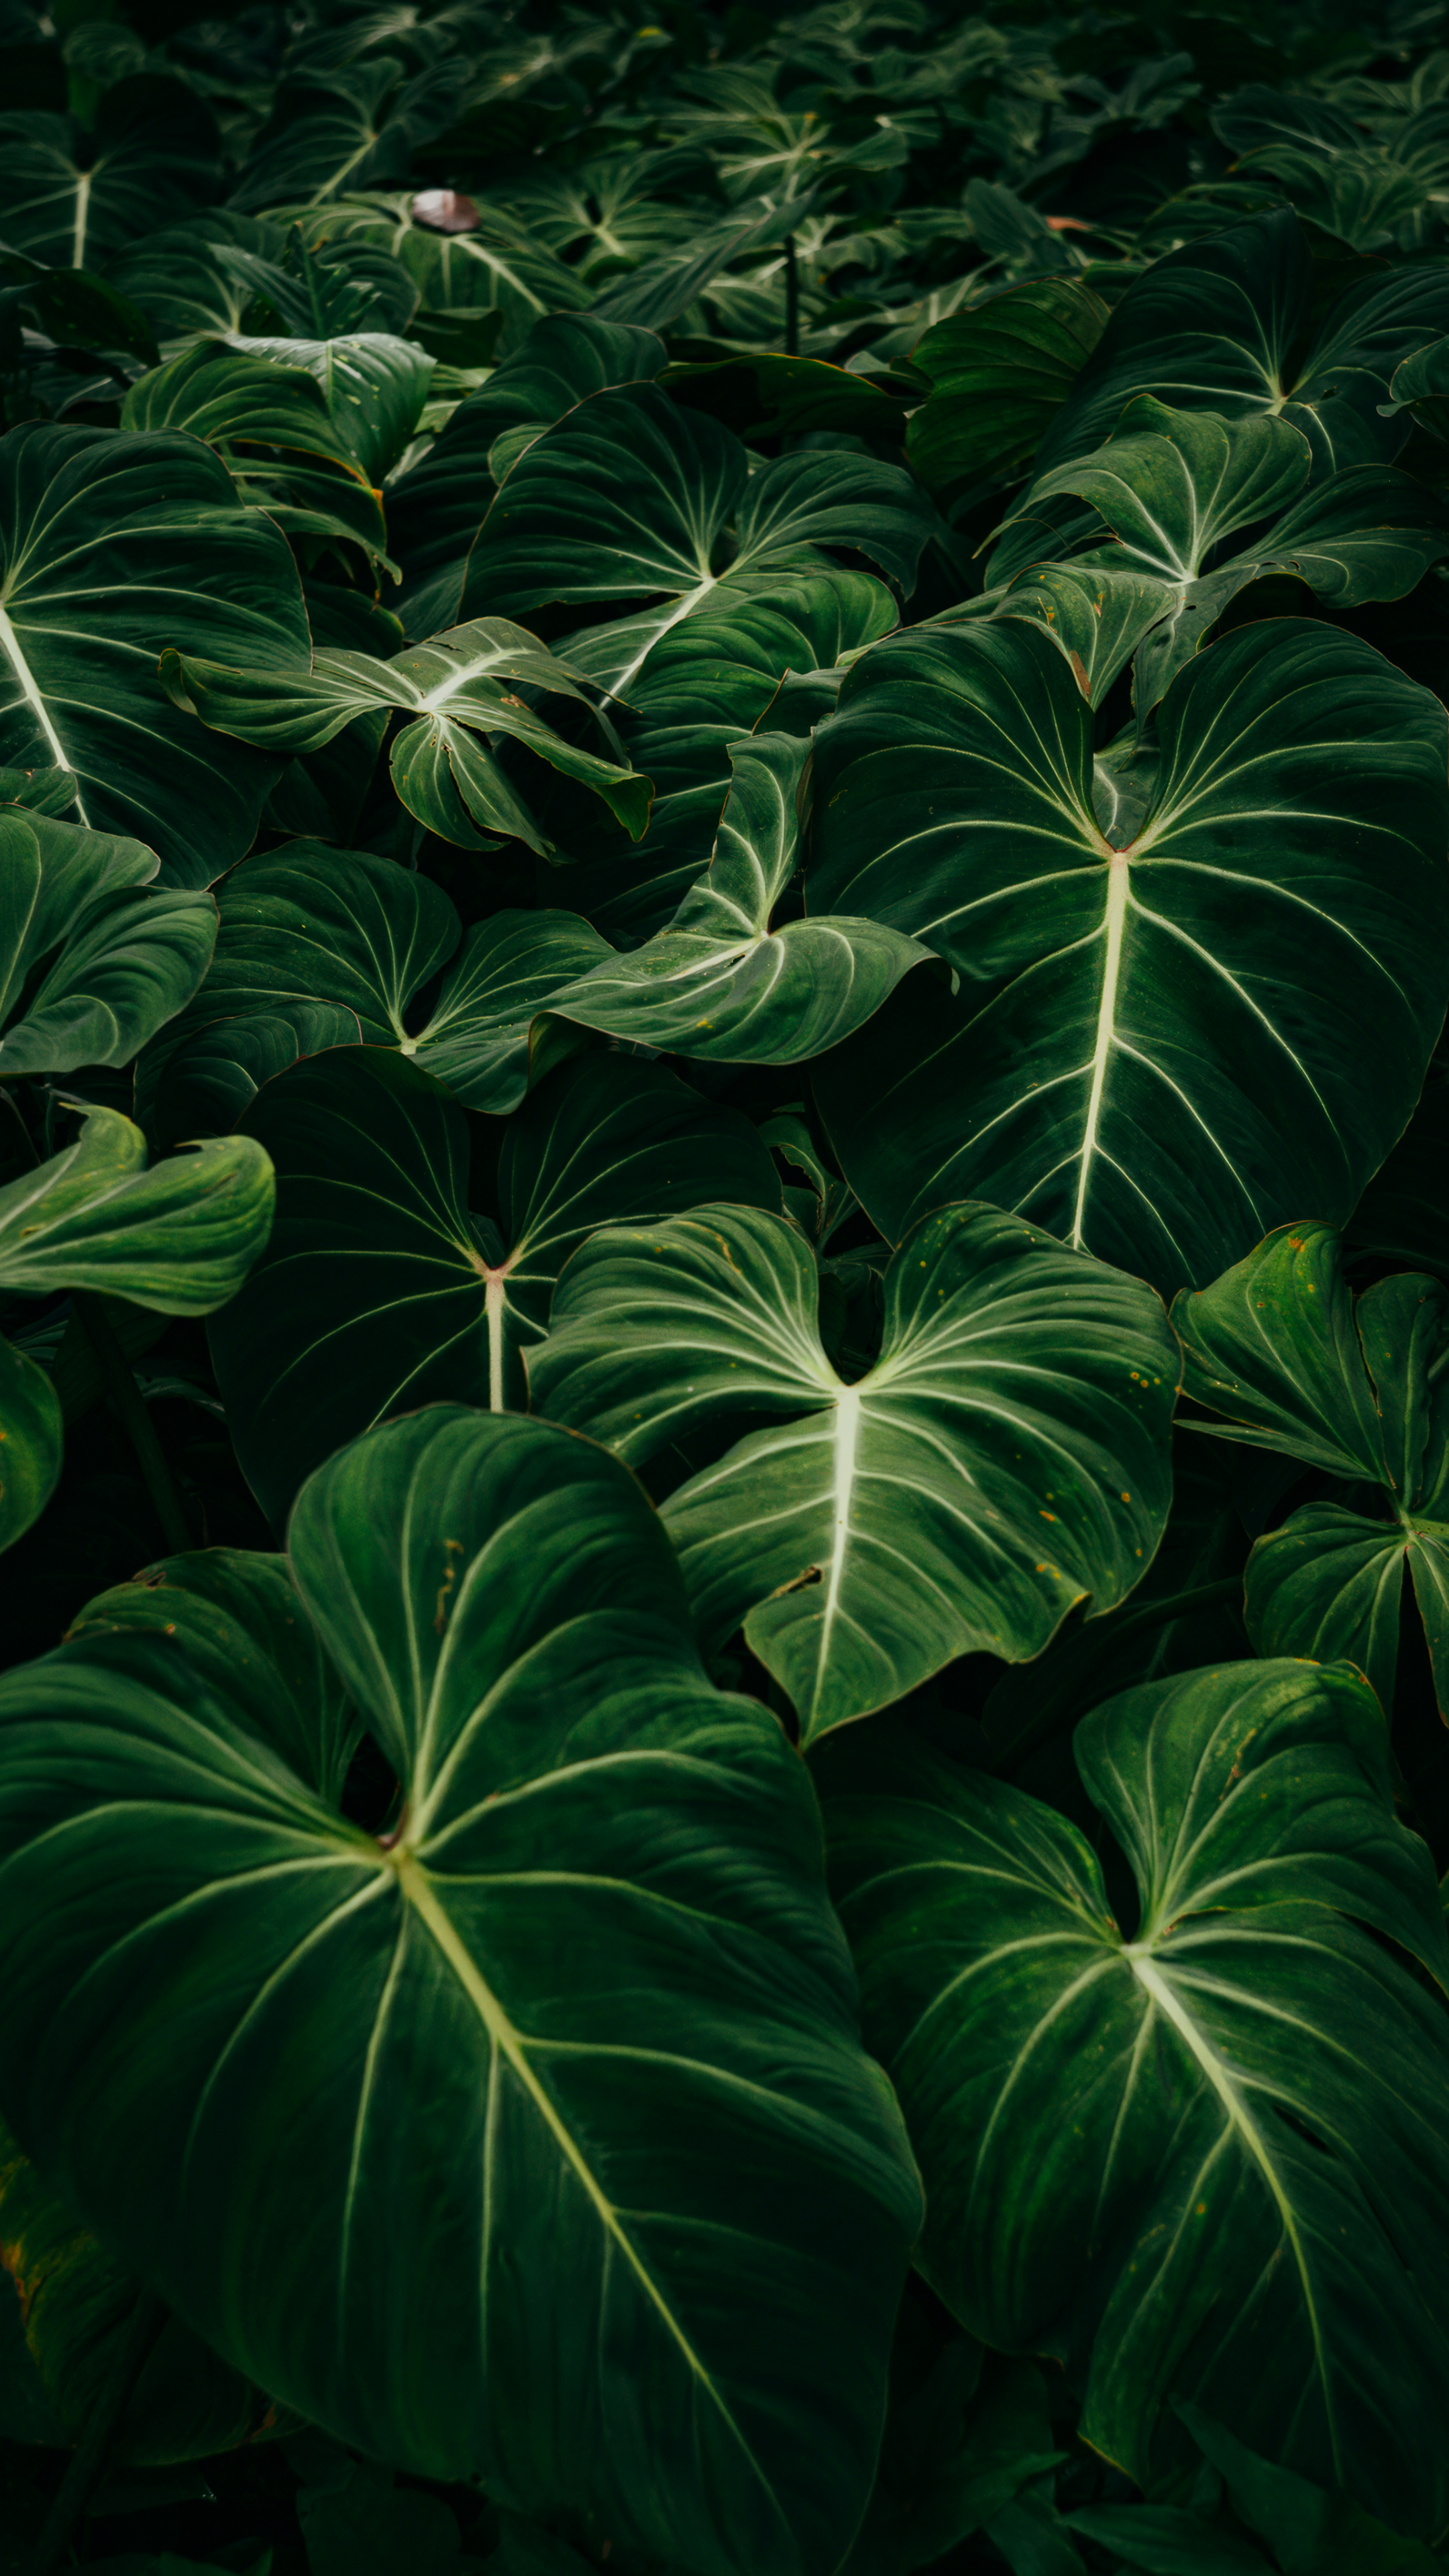 General 2160x3840 nature plants leaves green Split-leaf philodendron closeup portrait display